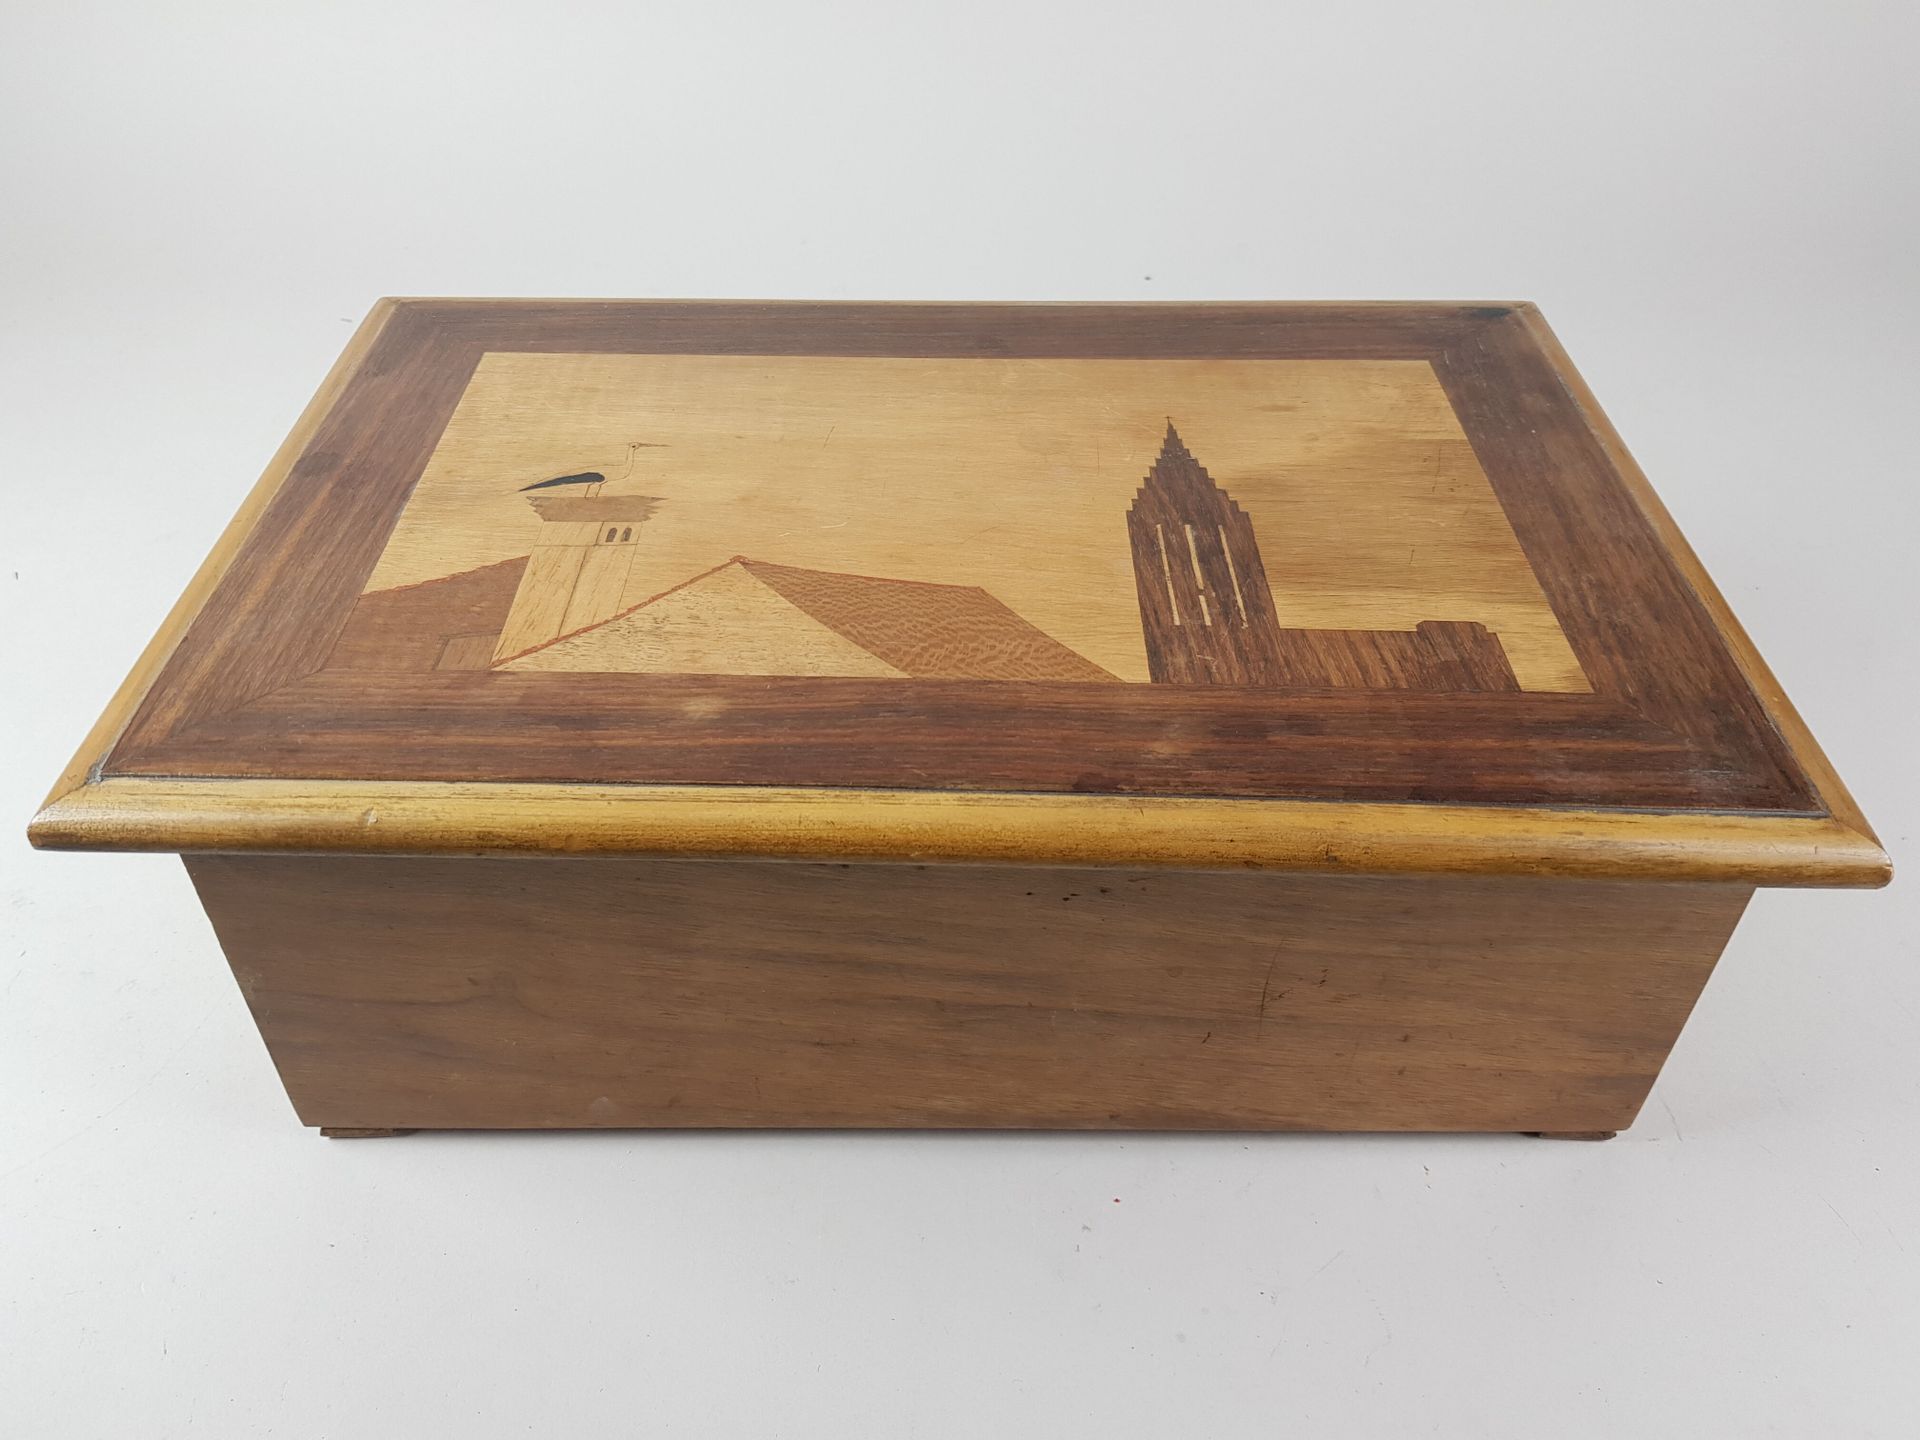 Null 镶嵌有斯特拉斯堡大教堂装饰的盒子。高13×宽37×深24厘米--磨损